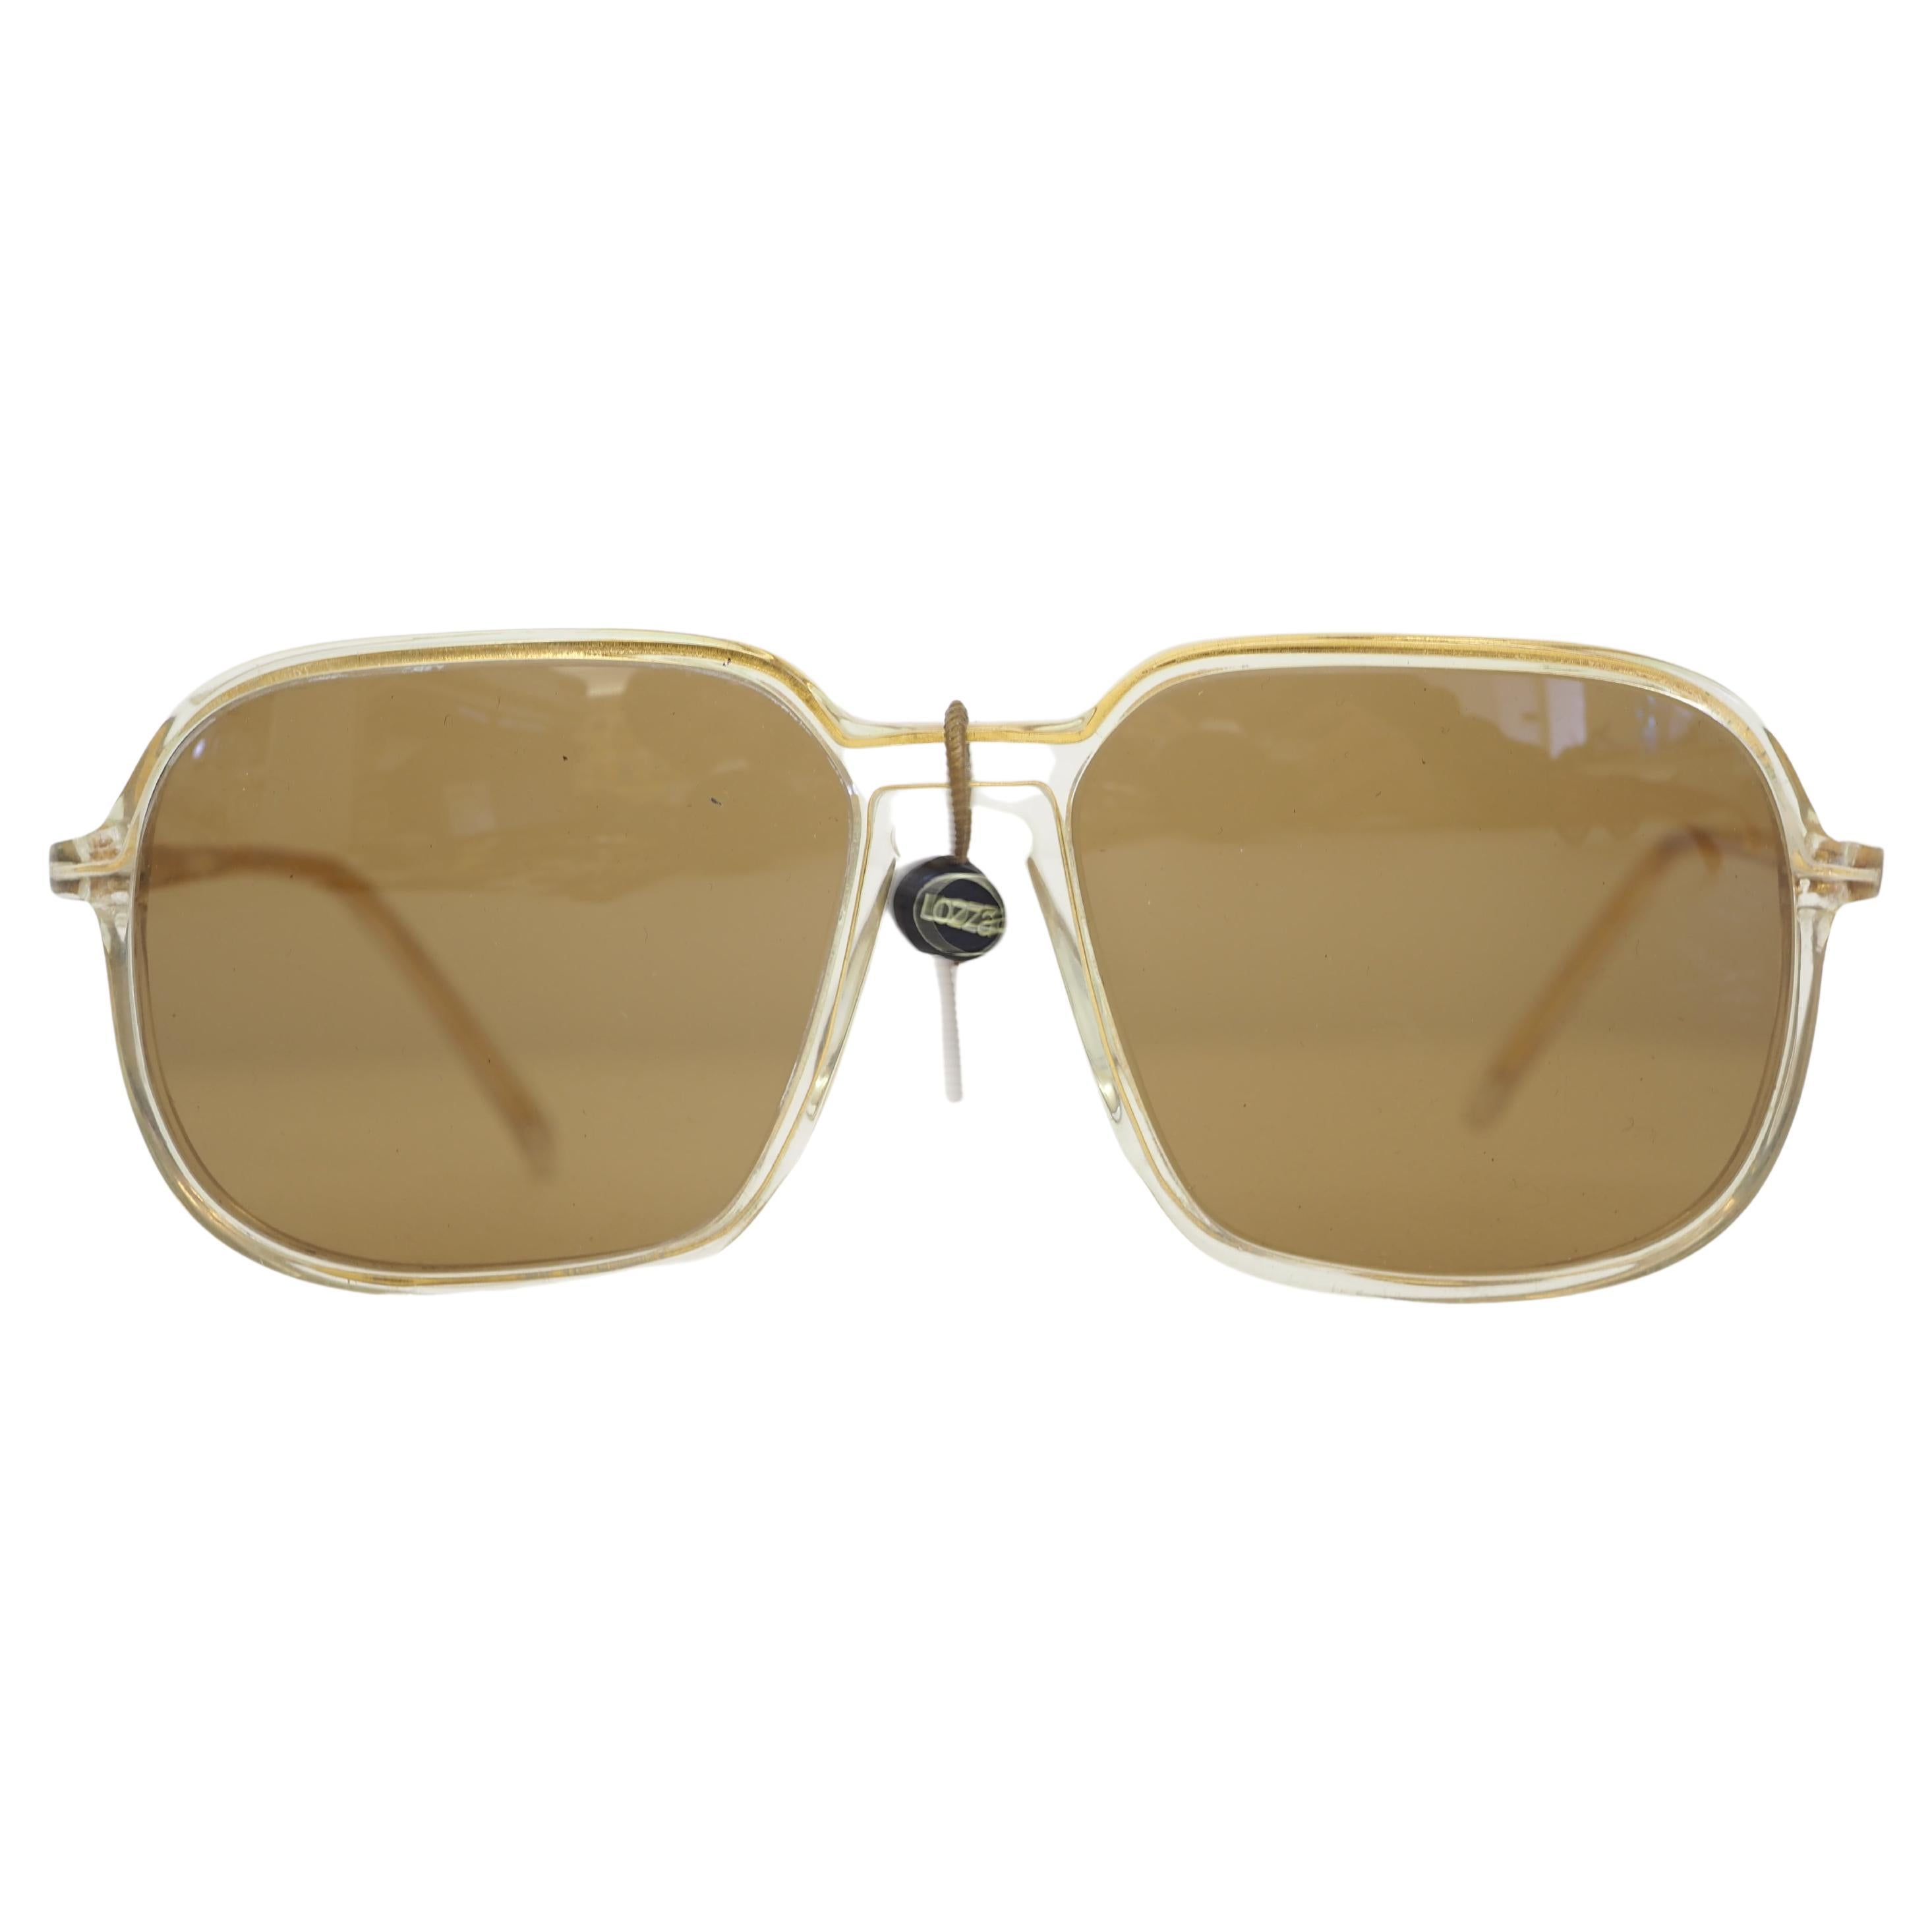 1990s Lozza vintage sunglasses